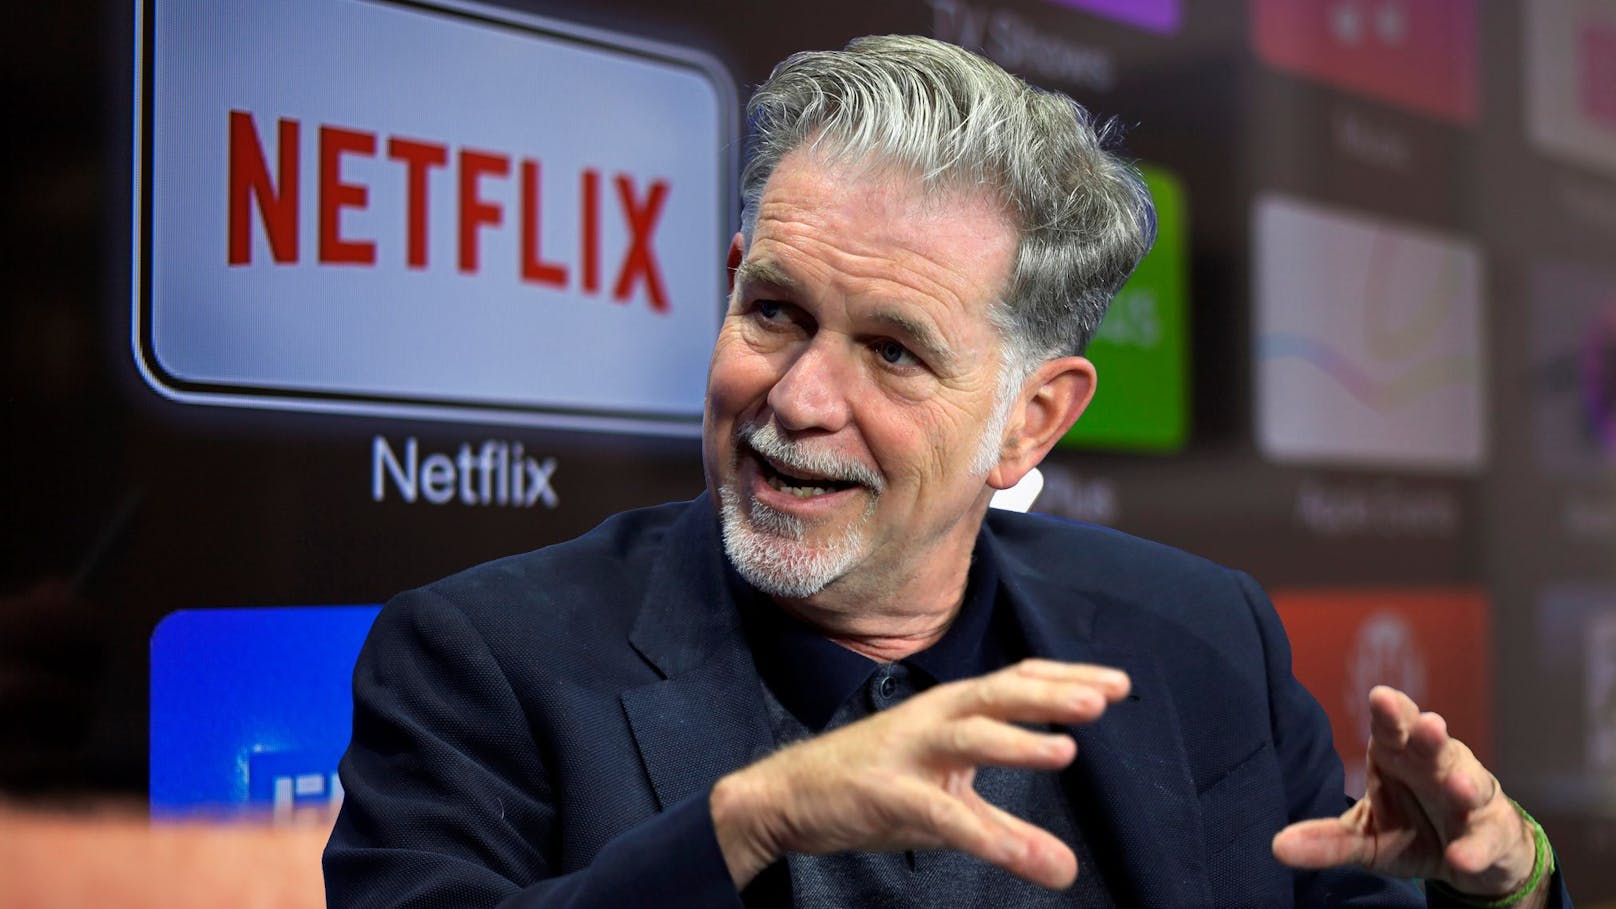 Netflix plant offenbar kostenloses Streaming-Angebot